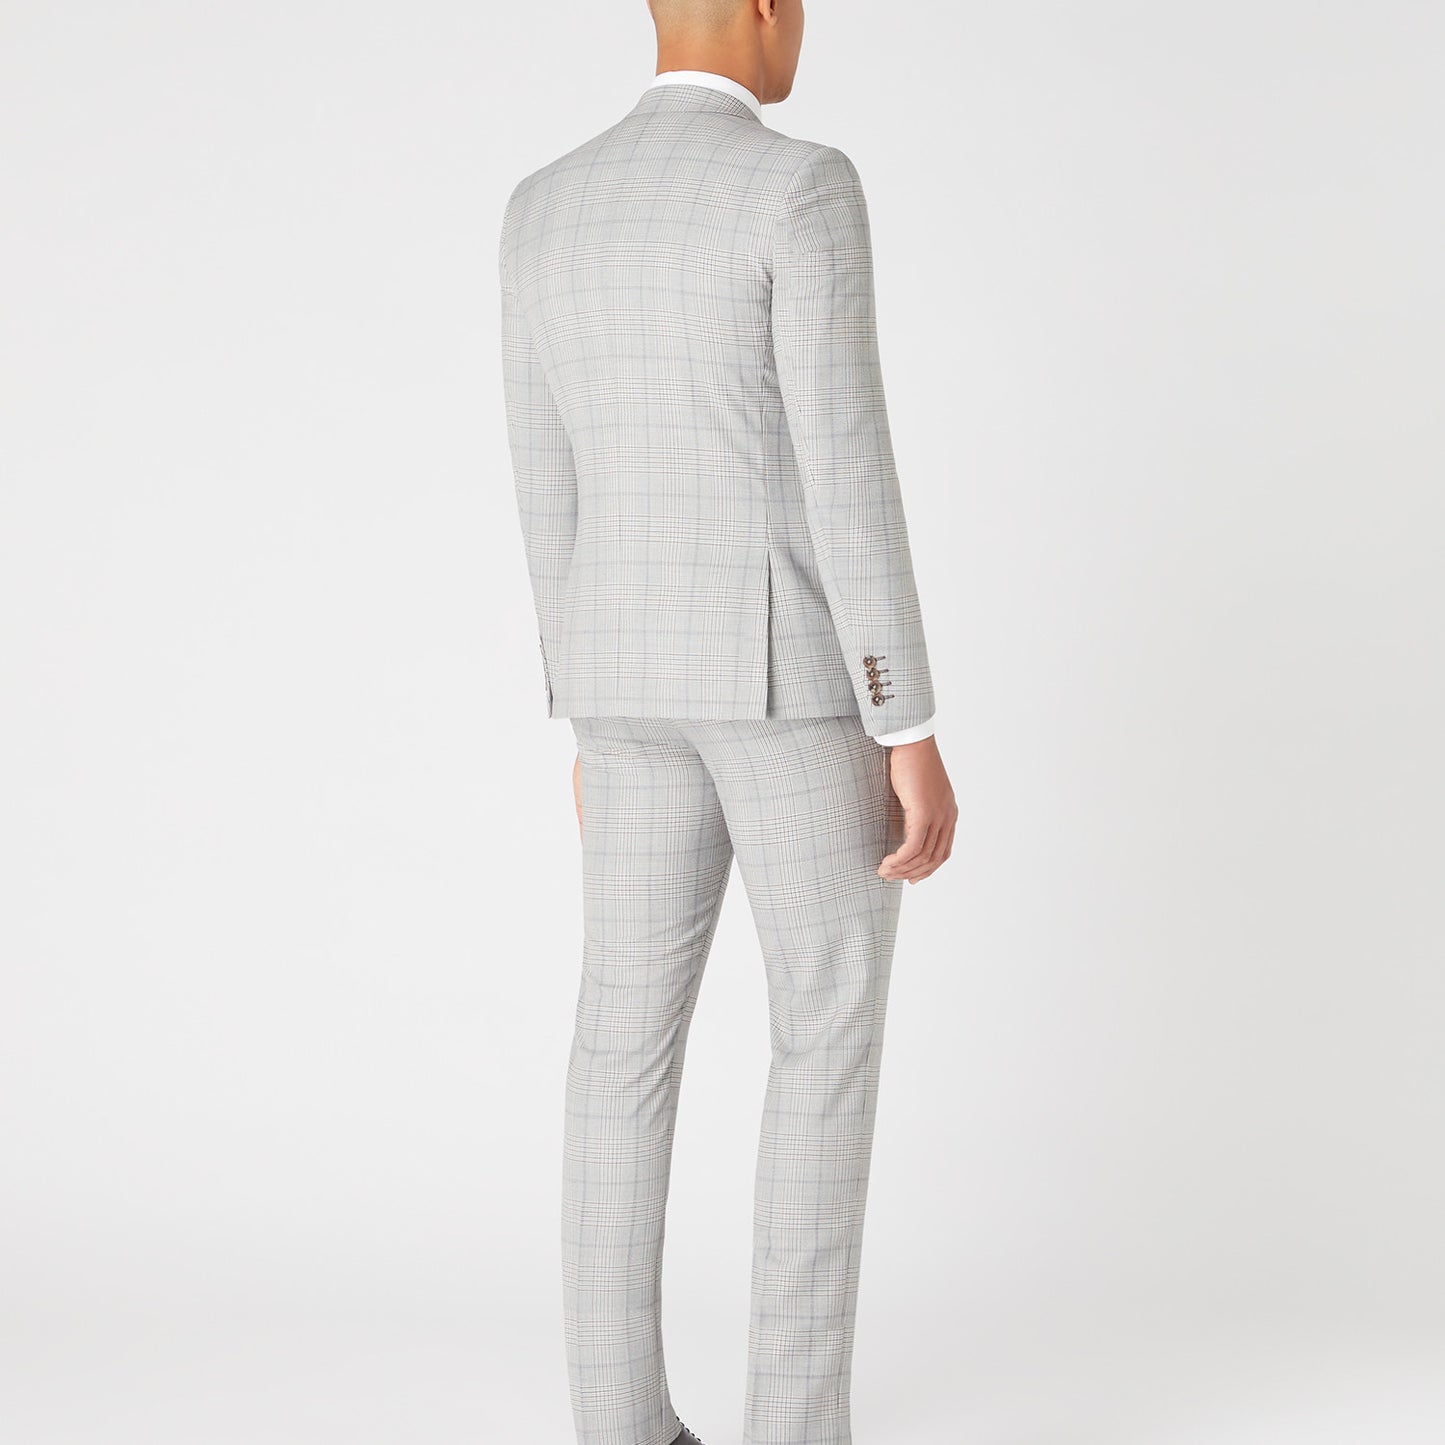 Remus Uomo 42035 04 Grey Tapered Suit Jacket